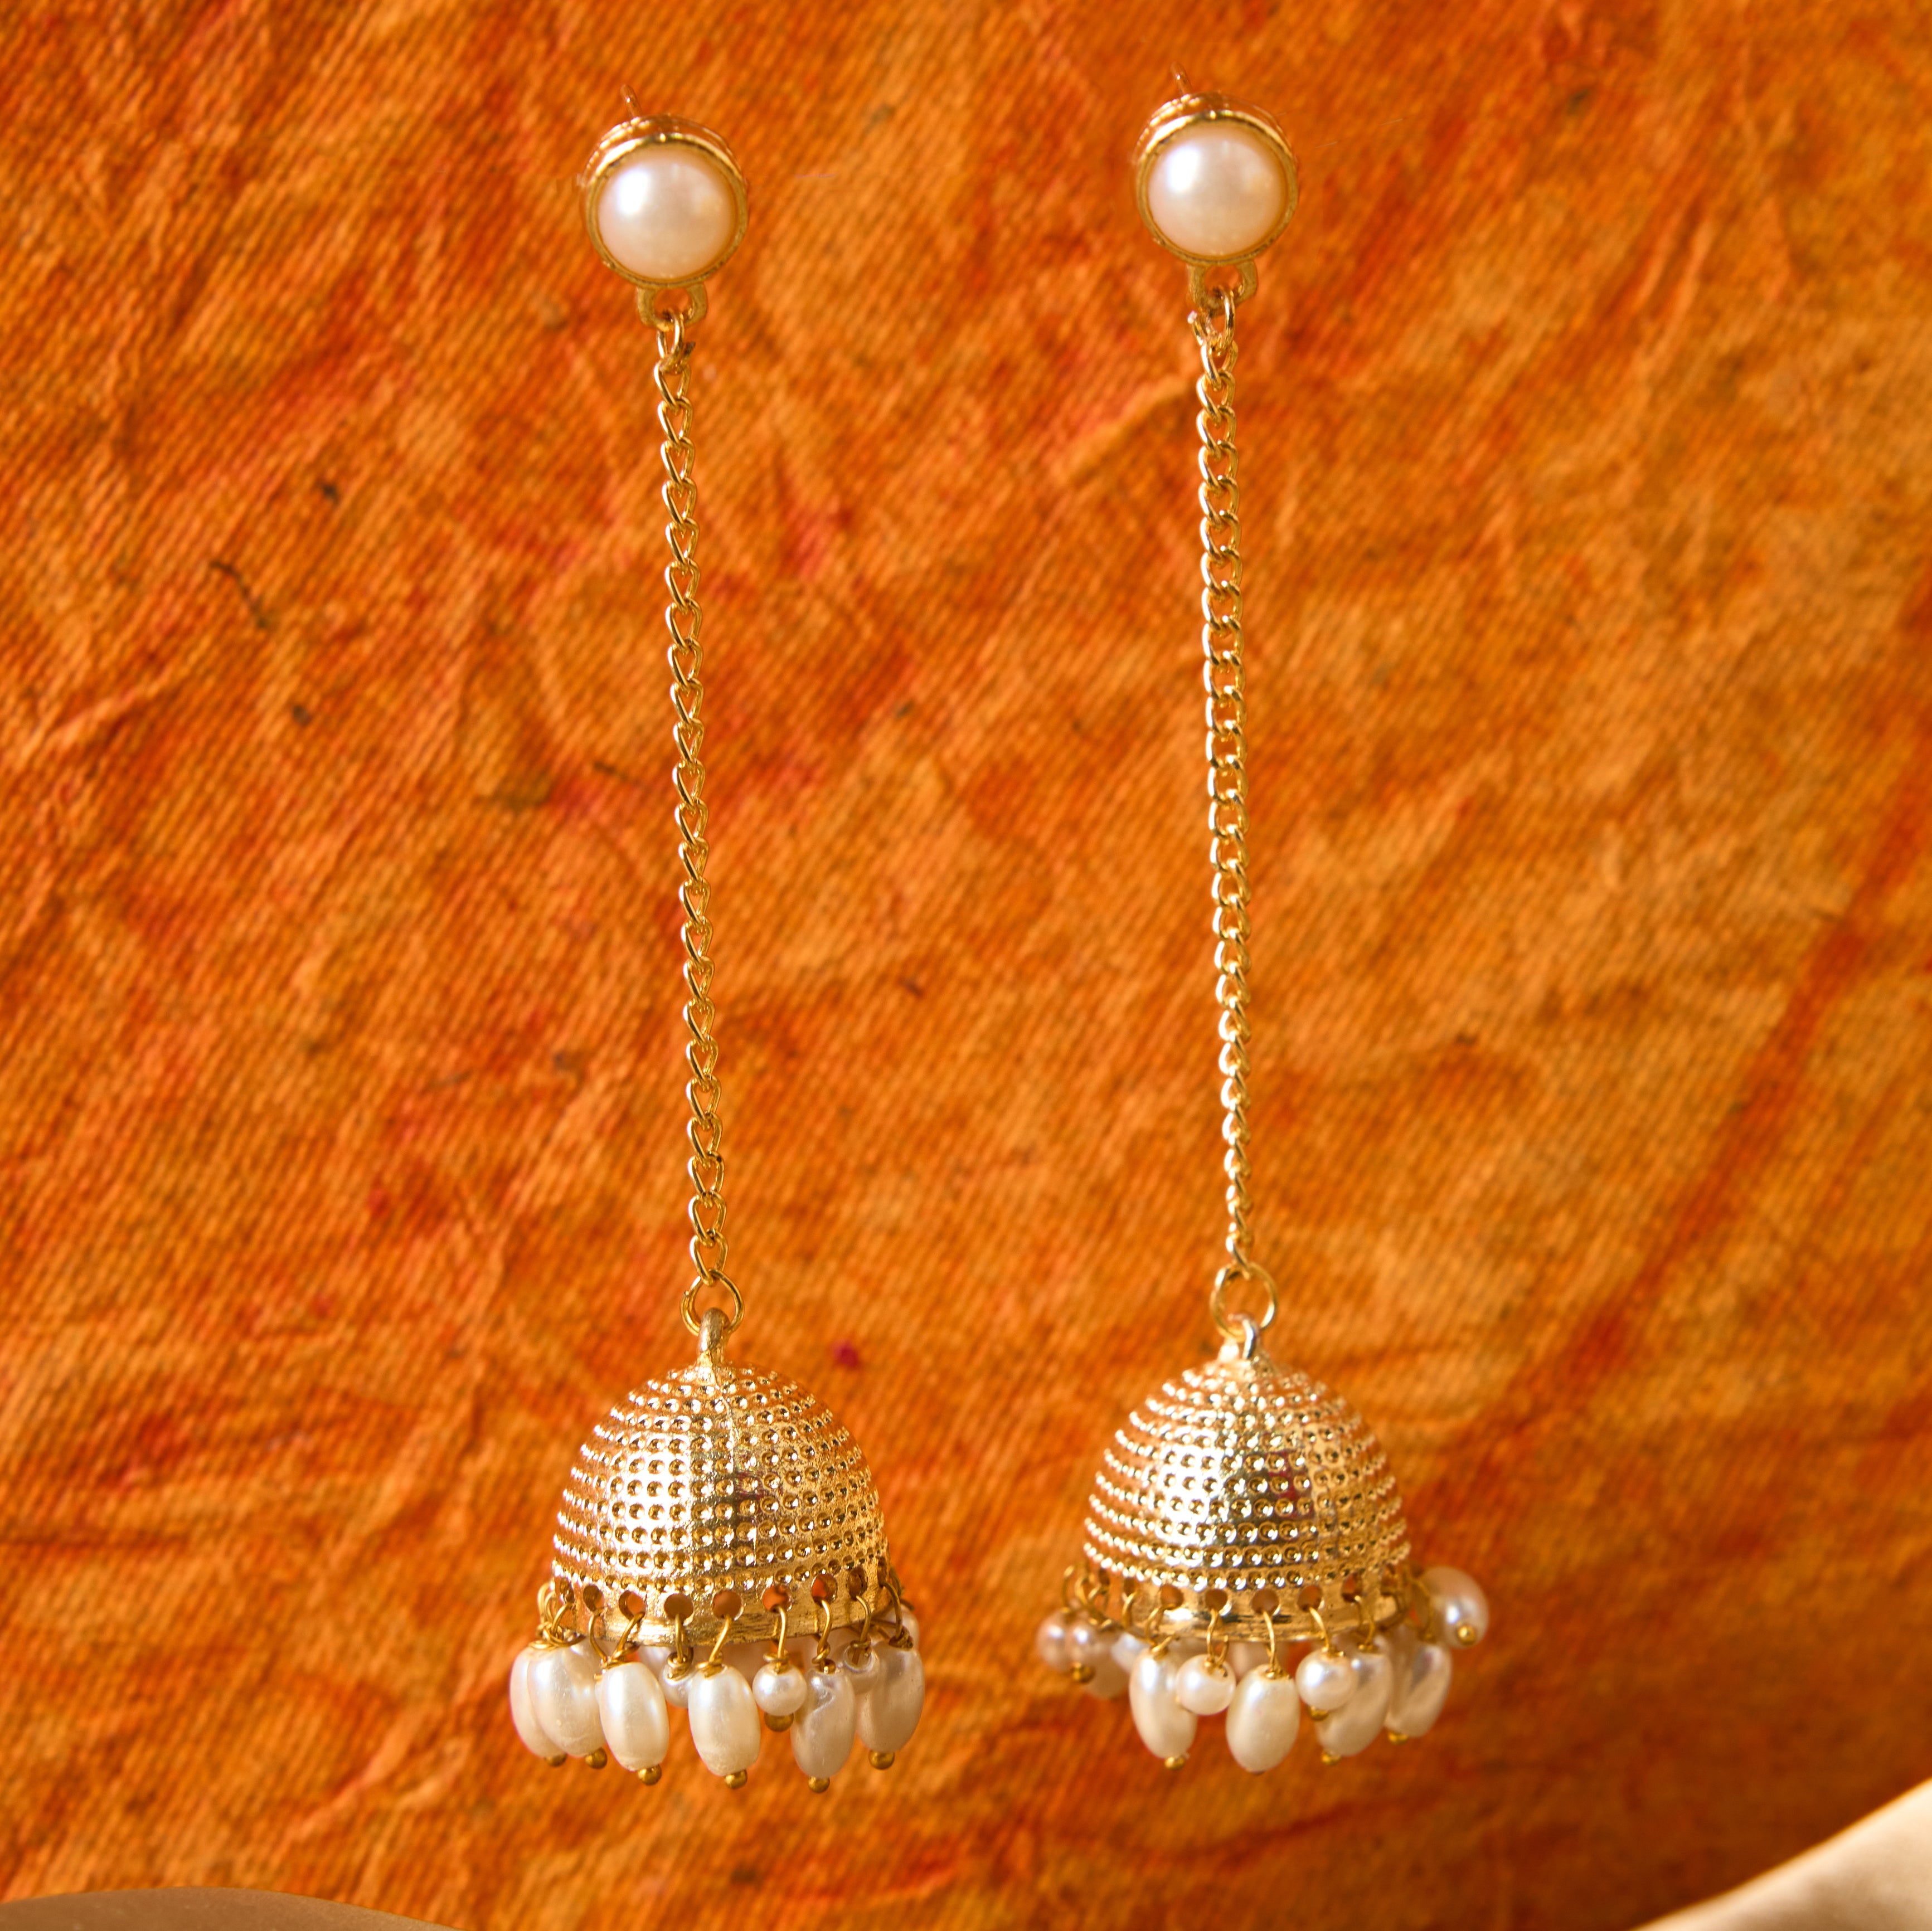 18K Gold '2 in 1' Detachable Diamond Jhumkas - Diamond Dangle Earrings with  Pearls - 235-DER1710 in 9.450 Grams